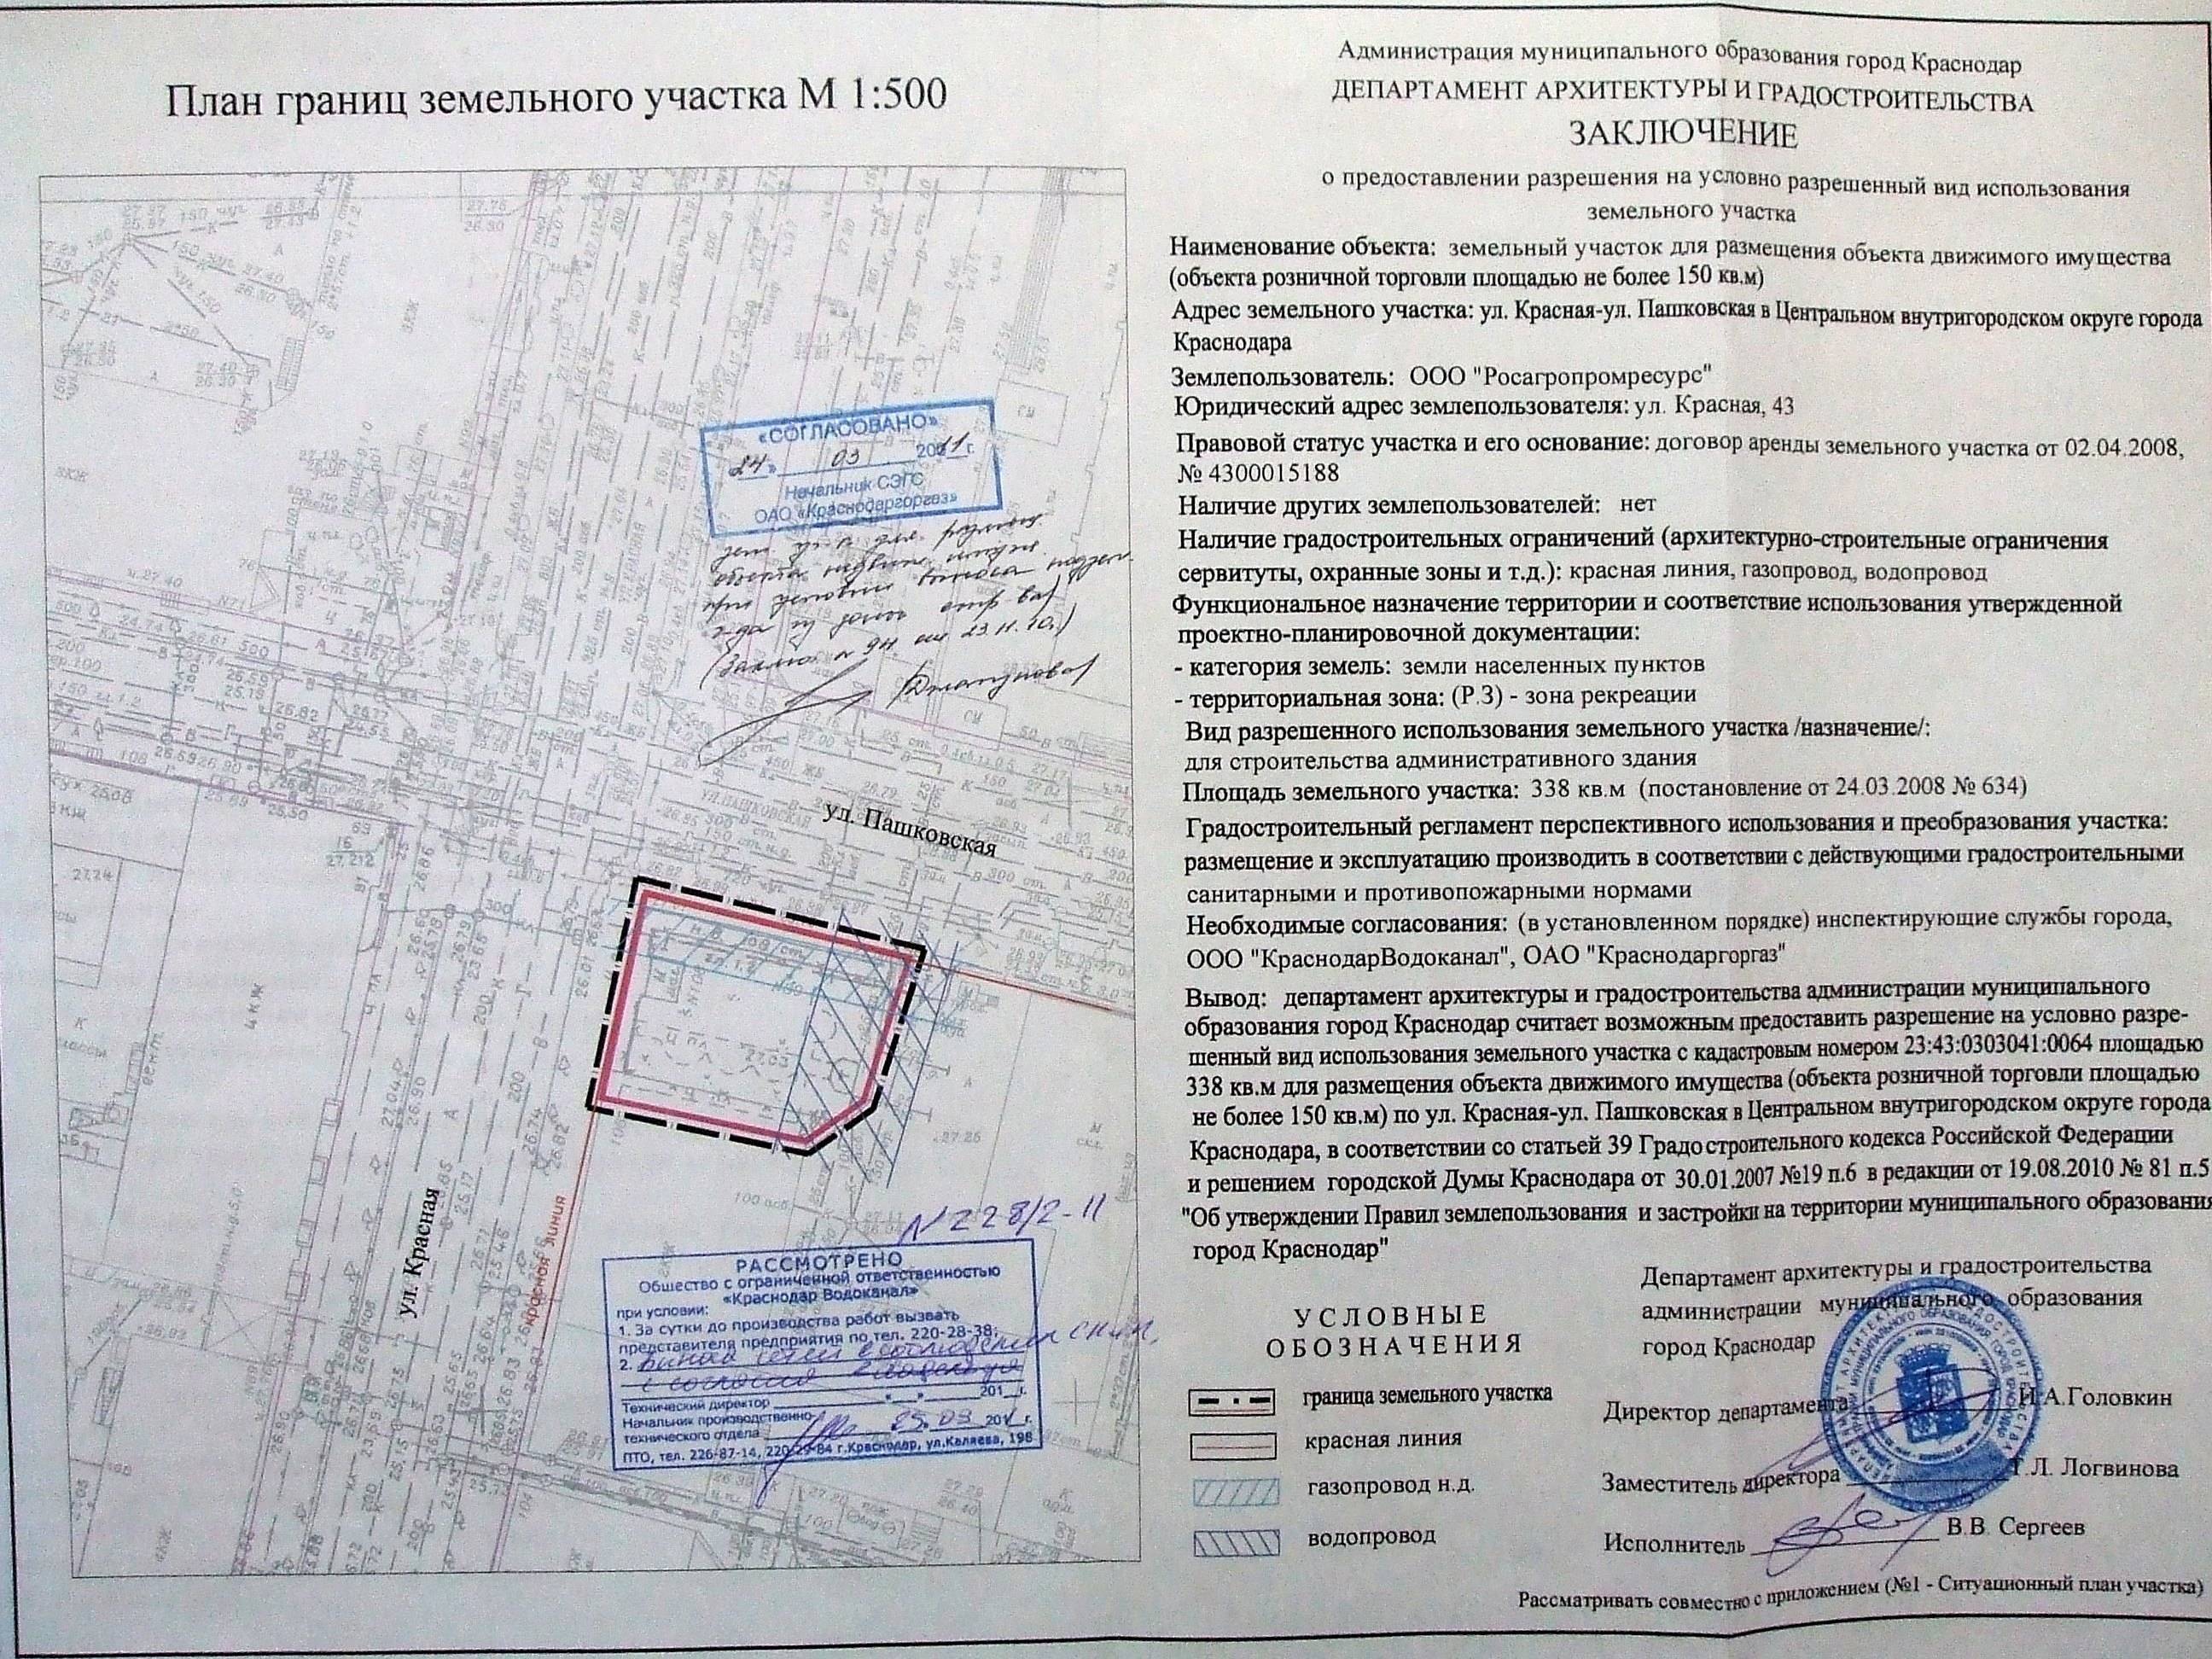 Публичная кадастровая карта москвы